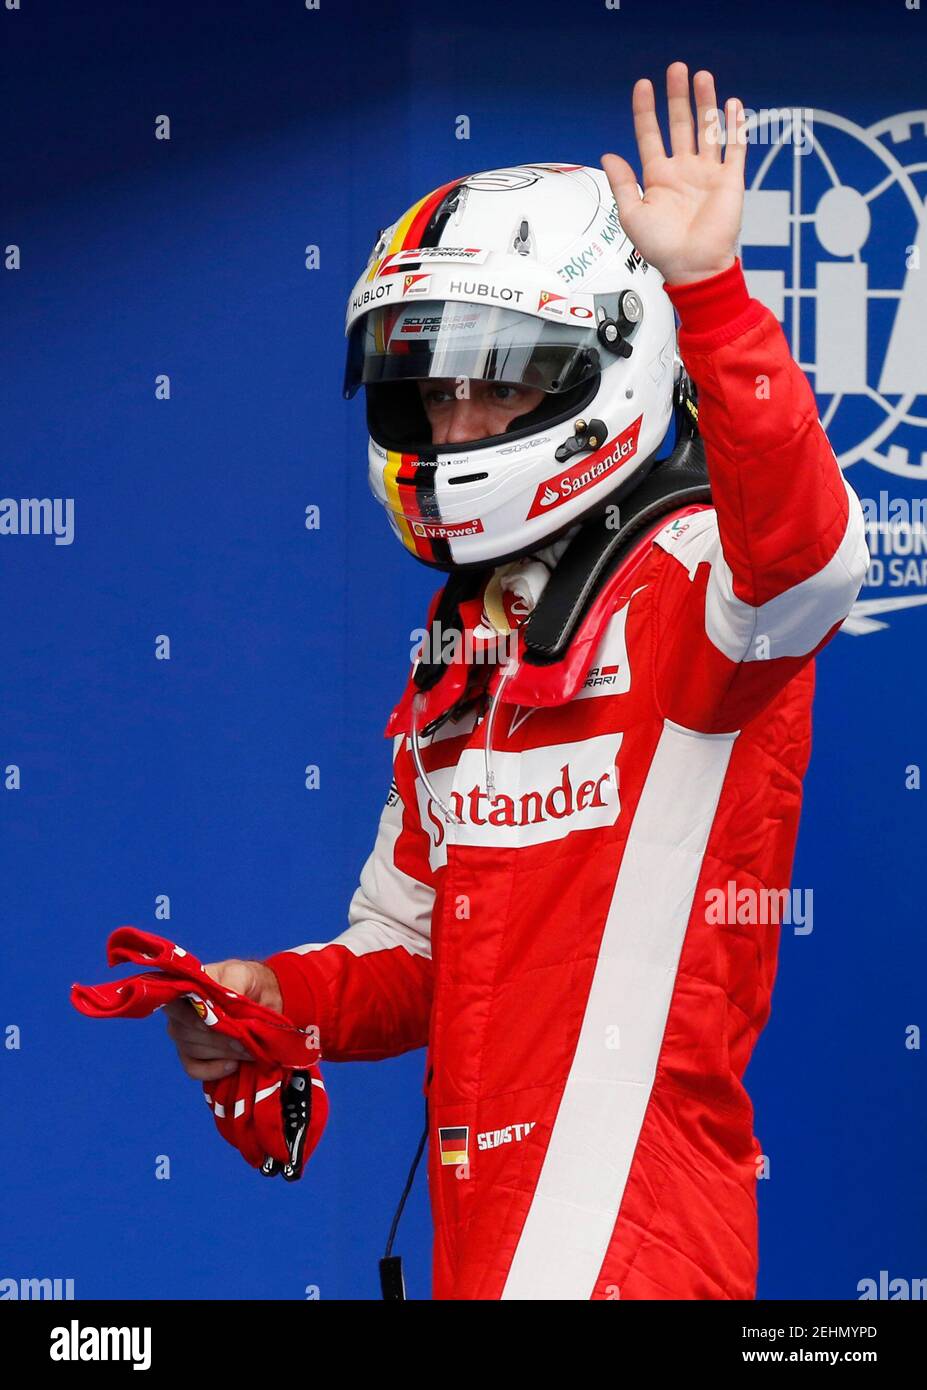 Formula One - F1 - Malaysian Grand Prix 2015 - Sepang International Circuit, Kuala Lumpur, Malaysia - 28/3/15  Ferrari's Sebastian Vettel celebrates qualifying in second place  Reuters / Olivia Harris  Livepic Stock Photo